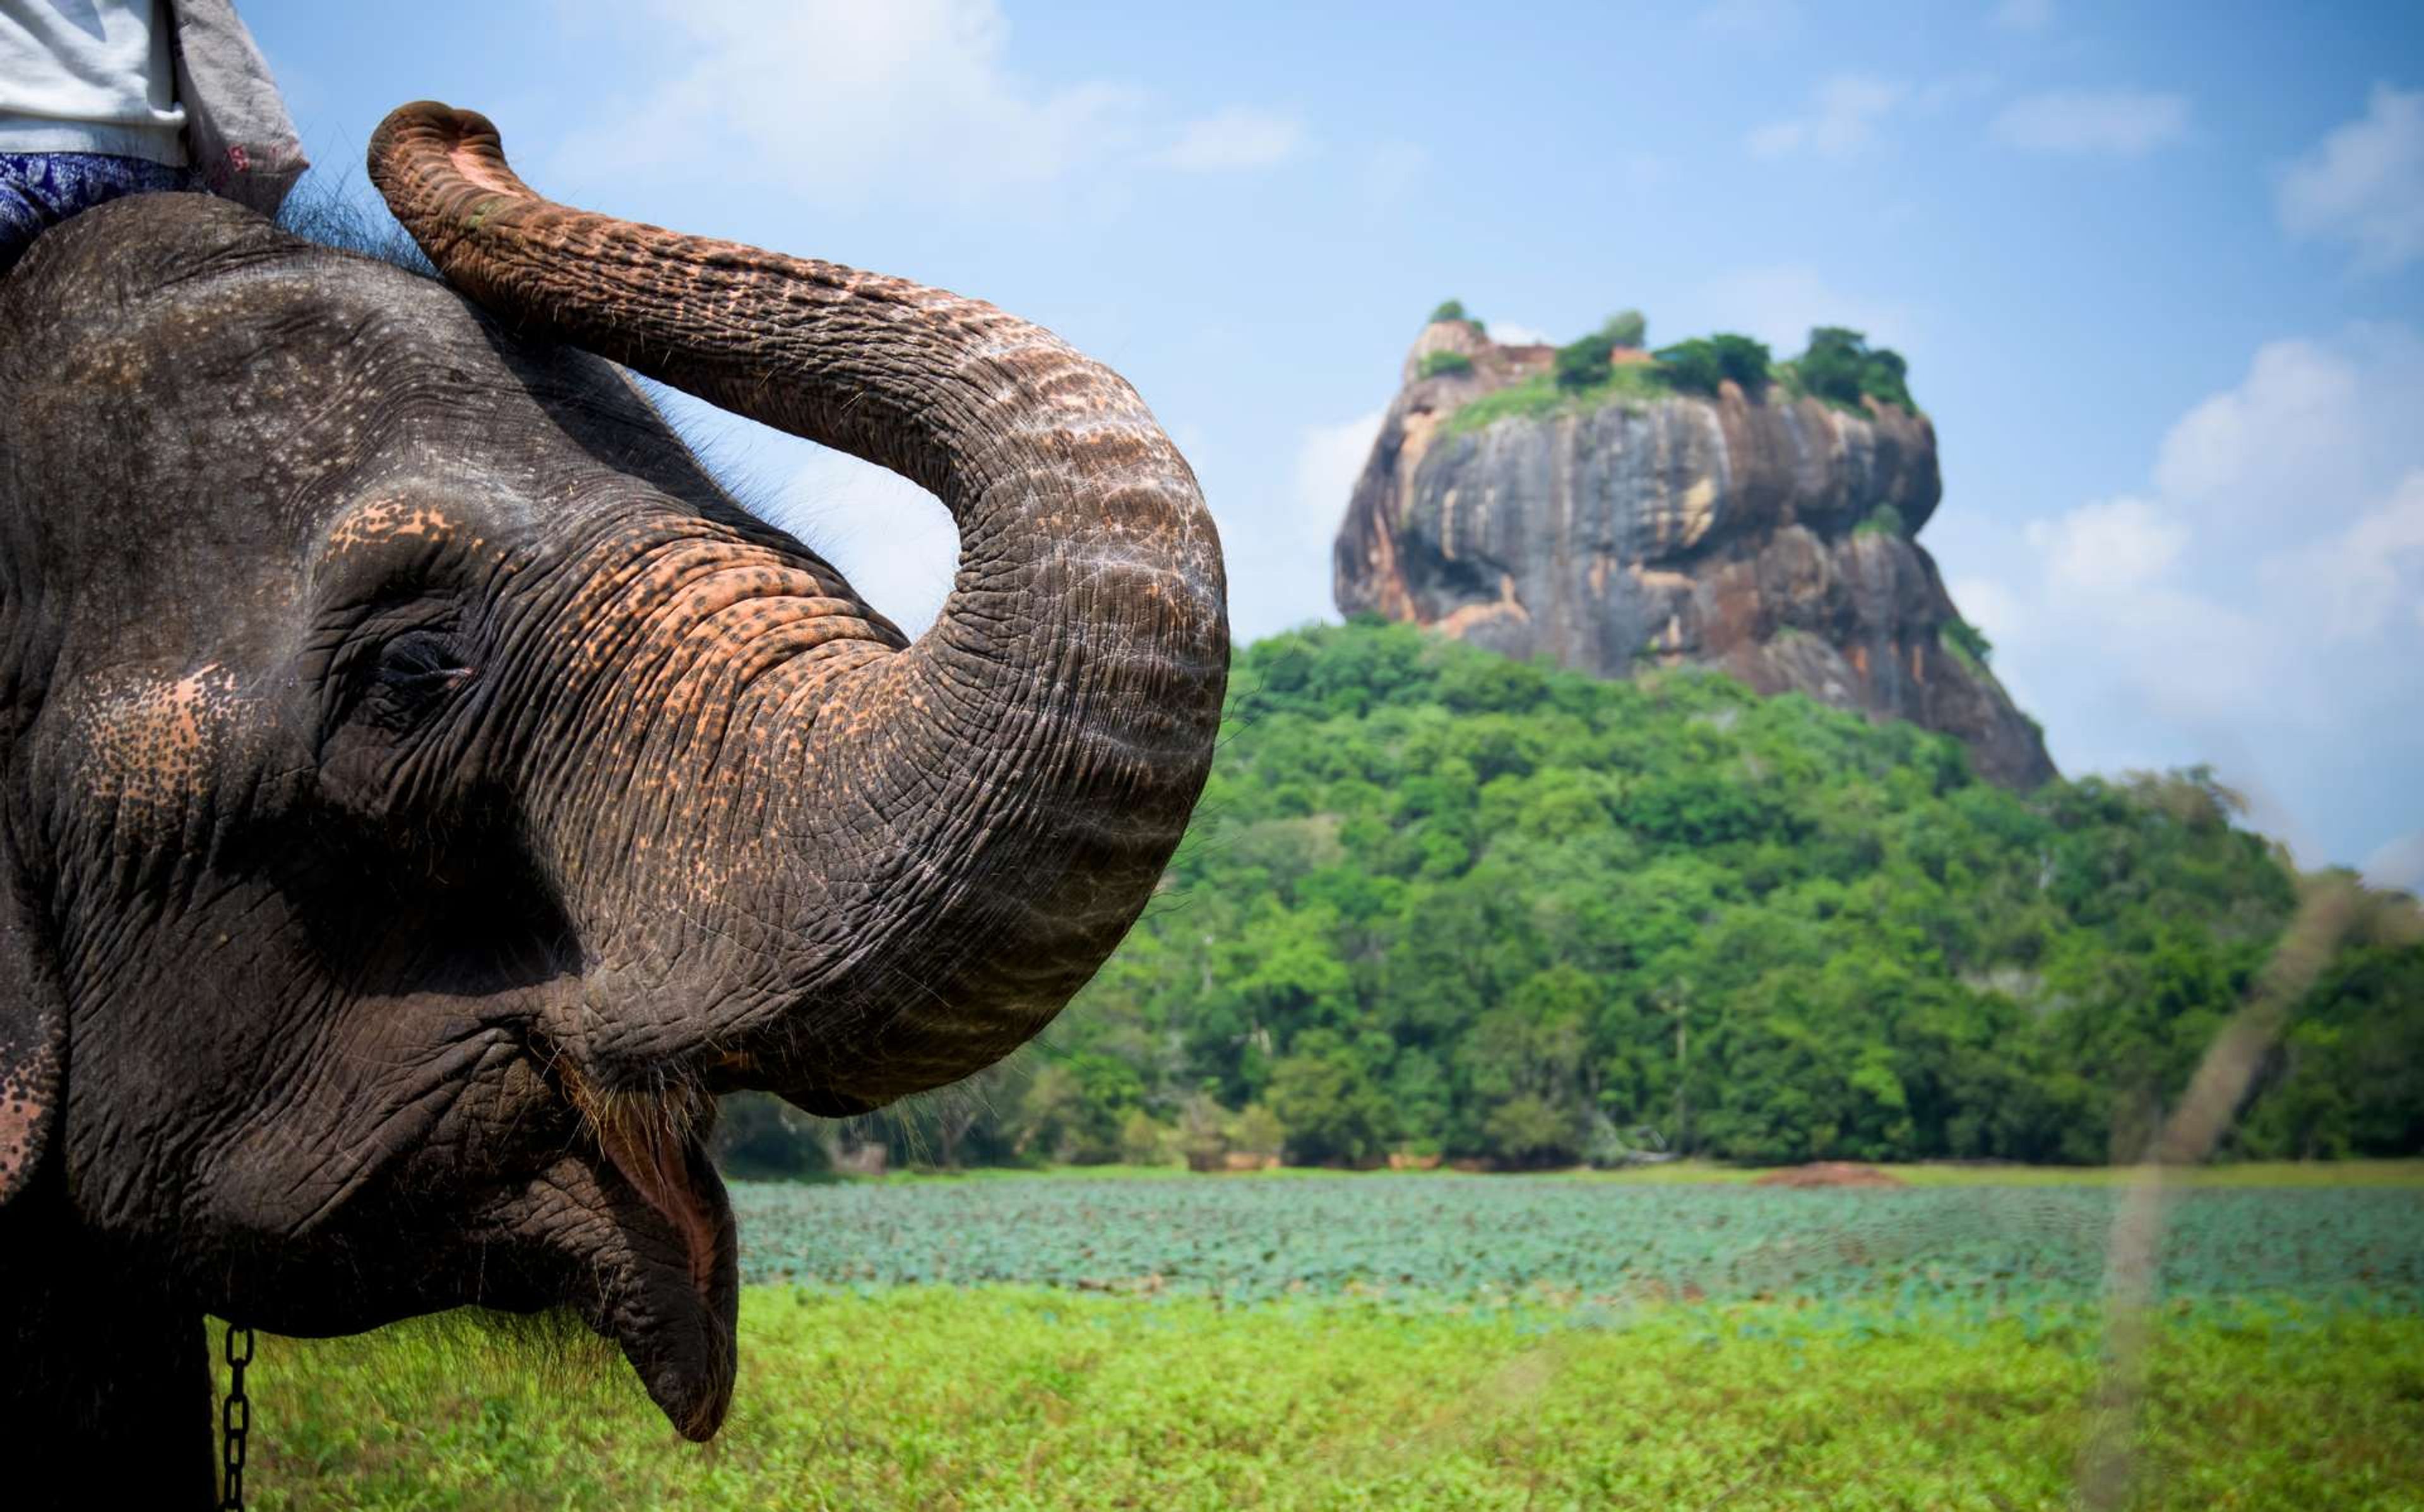 Sri Lanka Elephant in Sigiriya lion rock fortress